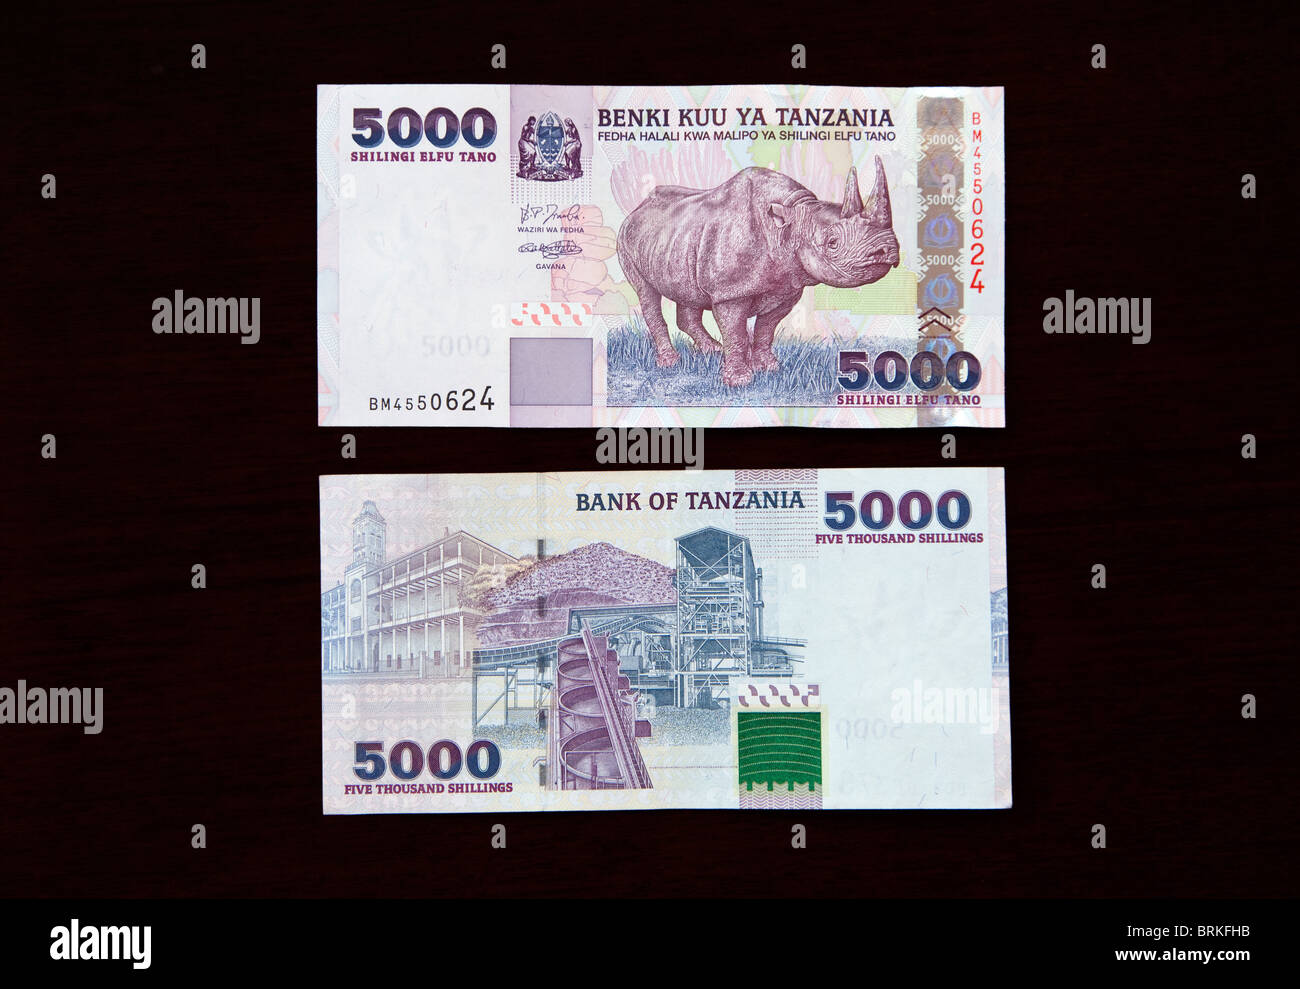 Tanzanian Banknote. 5000 Shillings. Rhinoceros on front, Zanzibar House of Wonders, Beit al-Ajaib, on left of rear, Geita gold Mine on right, 2003. Stock Photo